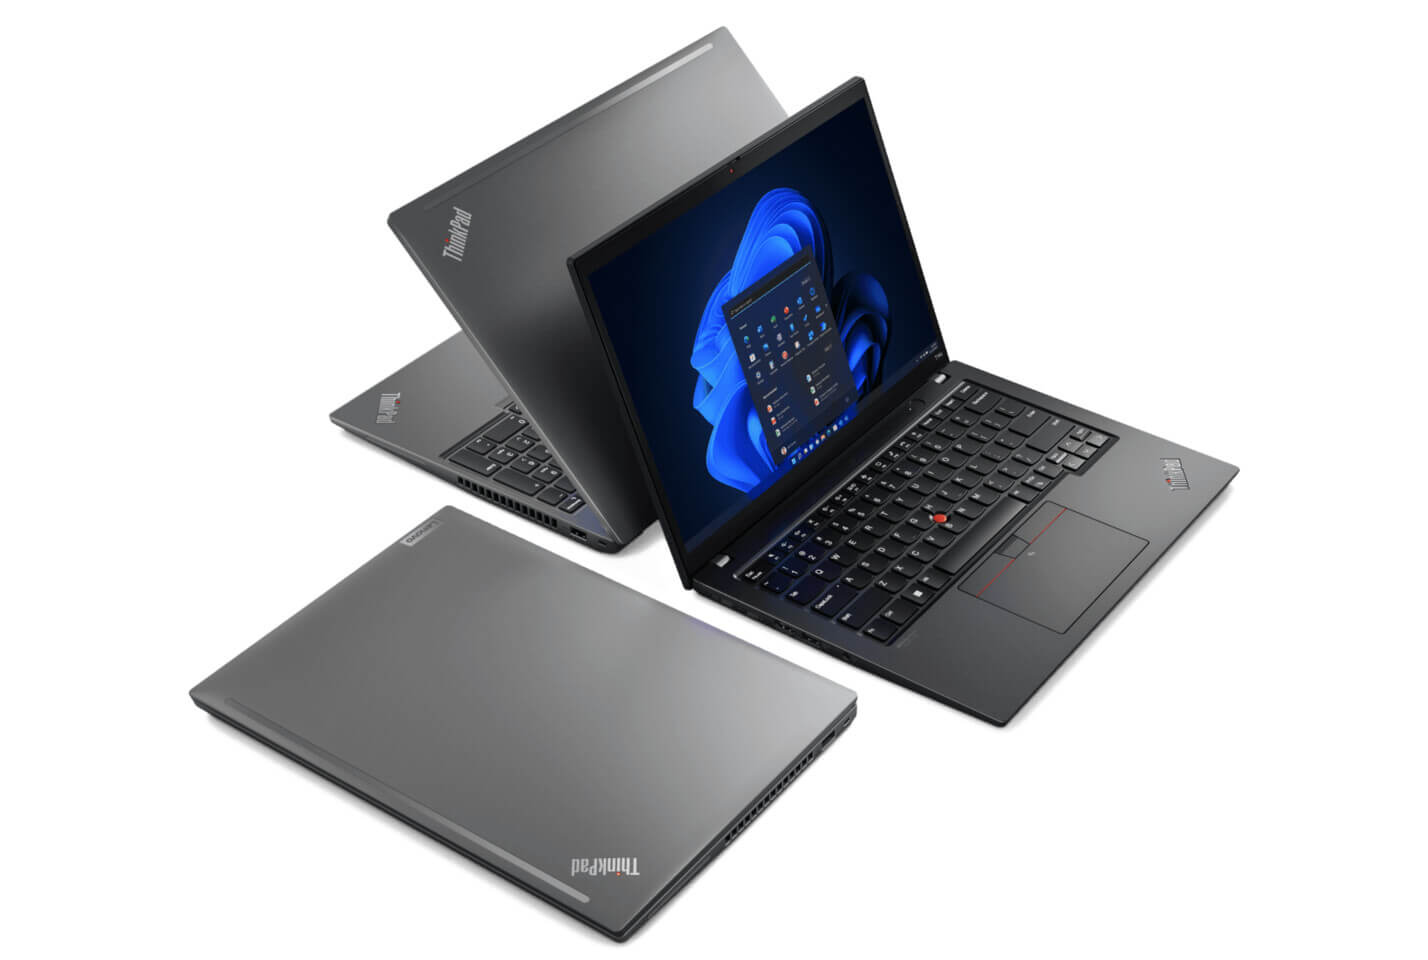 Lenovo ThinkPad y ThinkVision